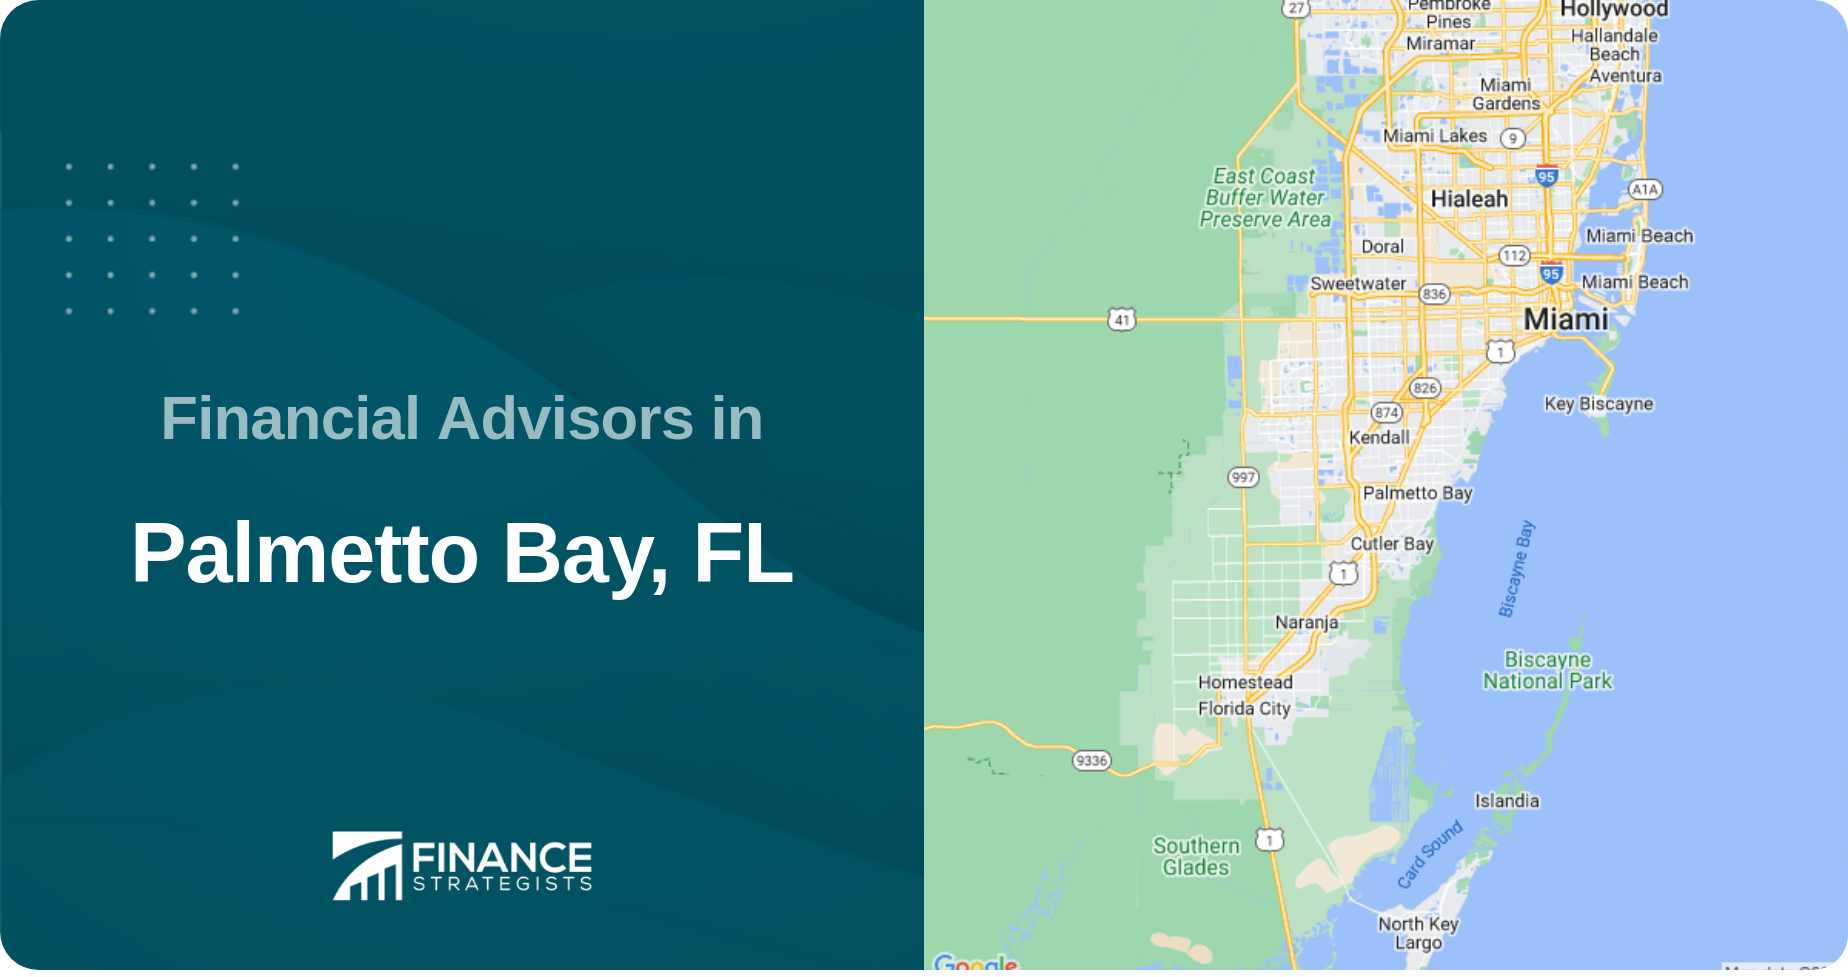 Financial Advisors in Palmetto Bay, FL